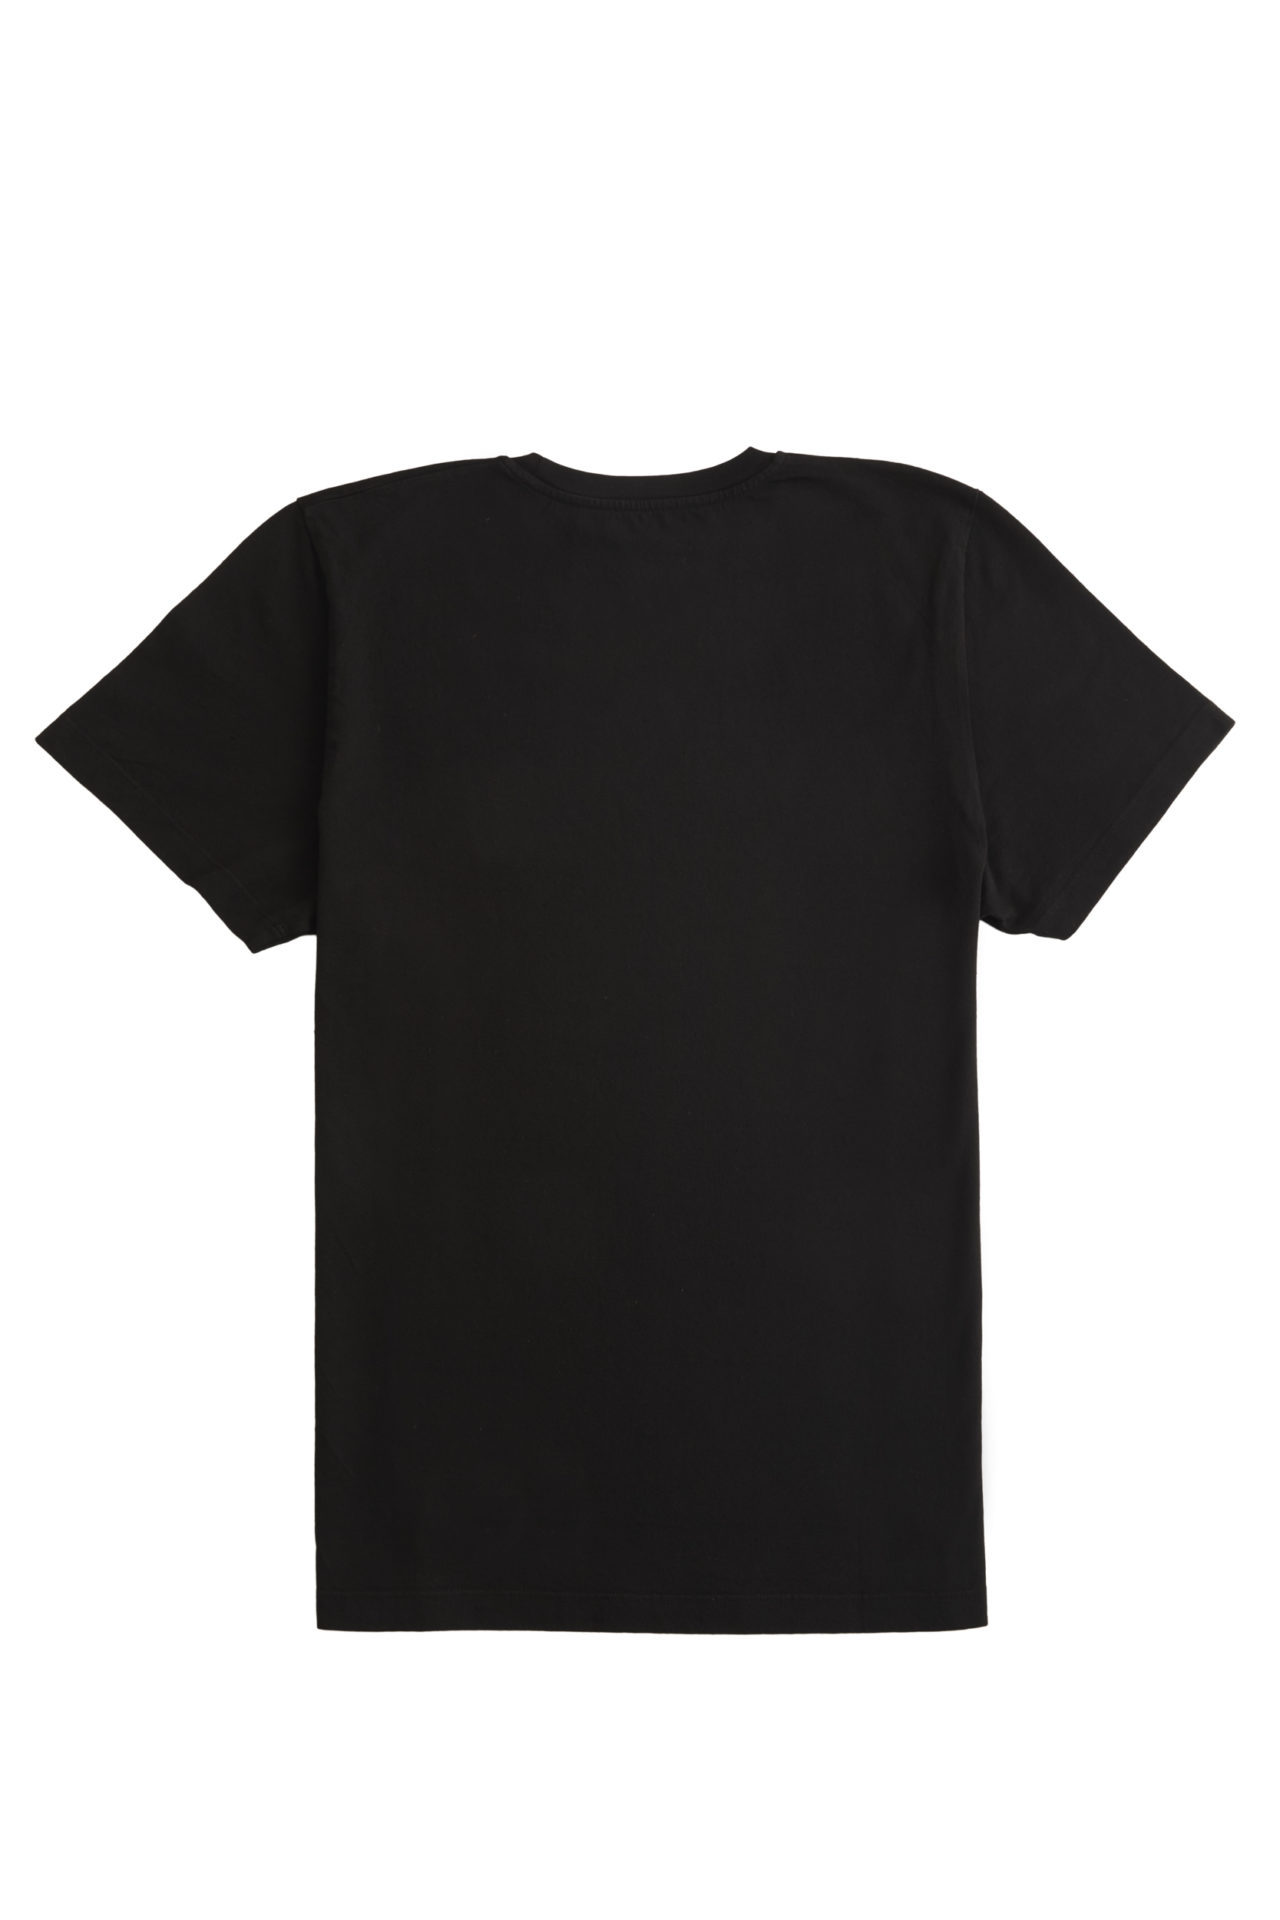 Tempus Fugit Black Raw Cotton T-Shirt - Barbanera